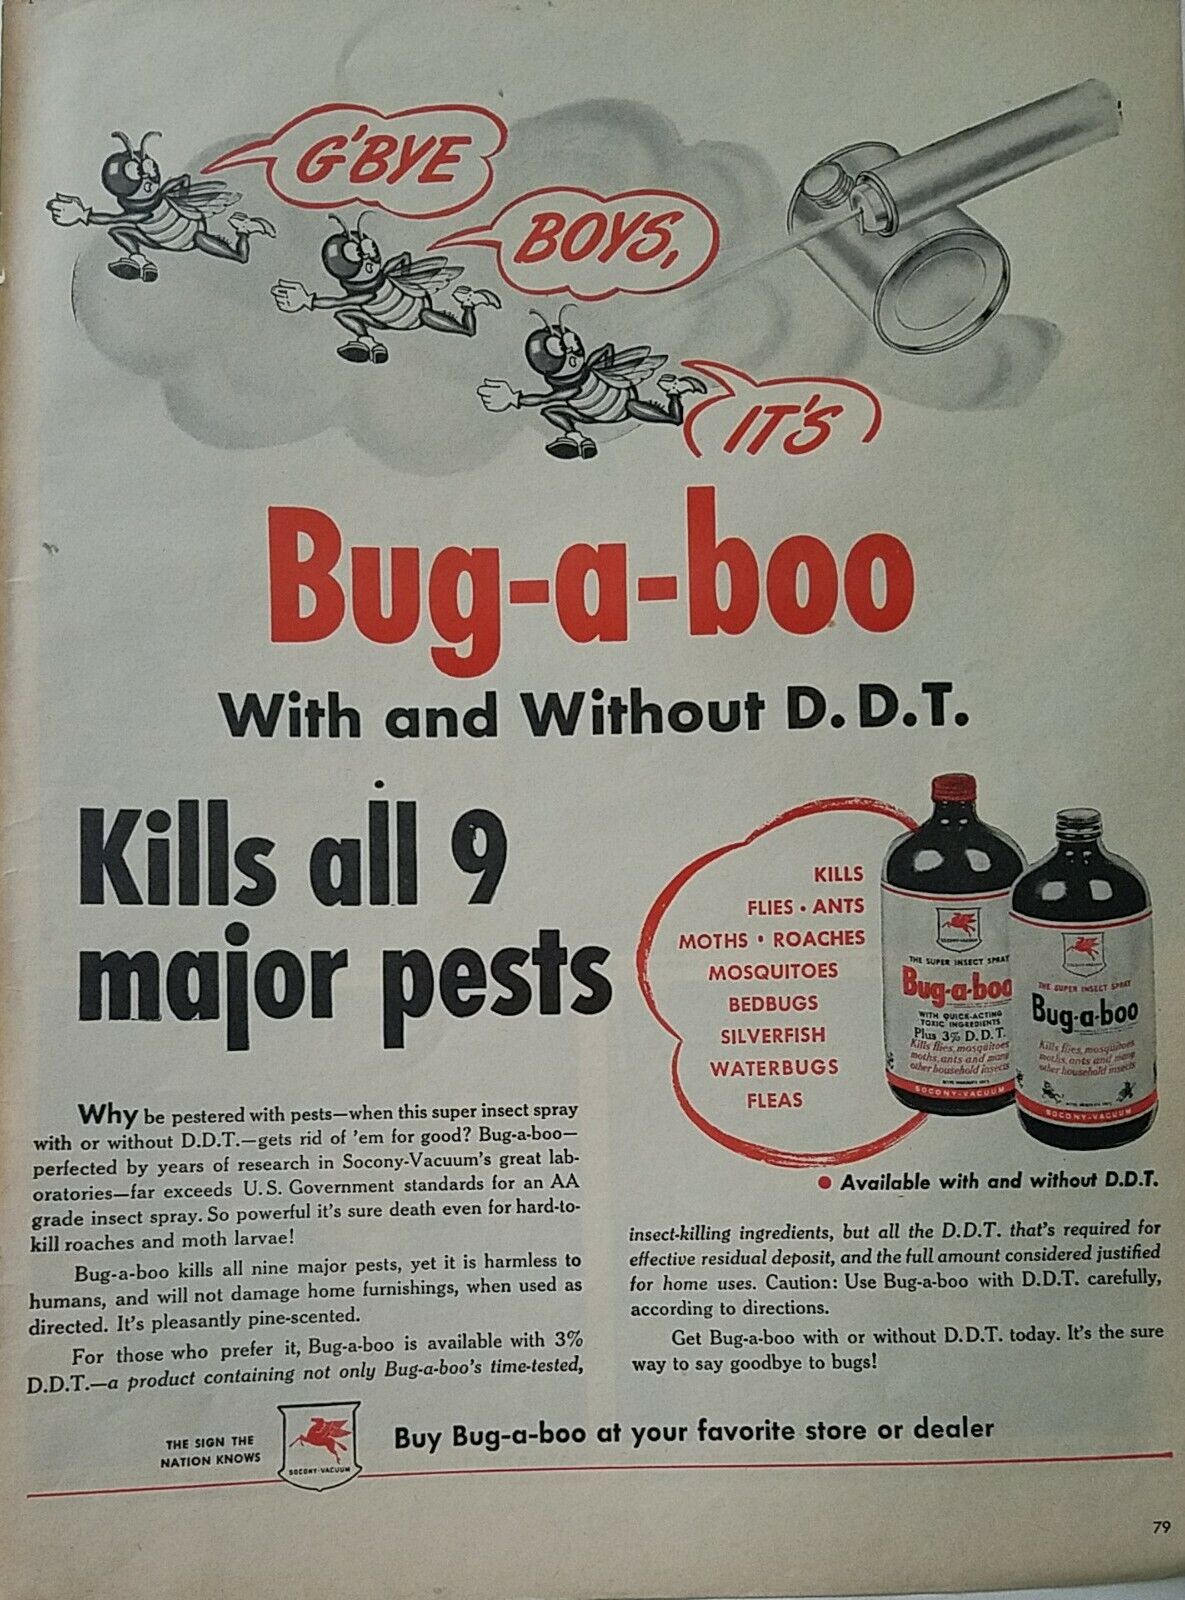 1946 Bugaboo insecticide without DDTZ kills major pests vintage bug ad